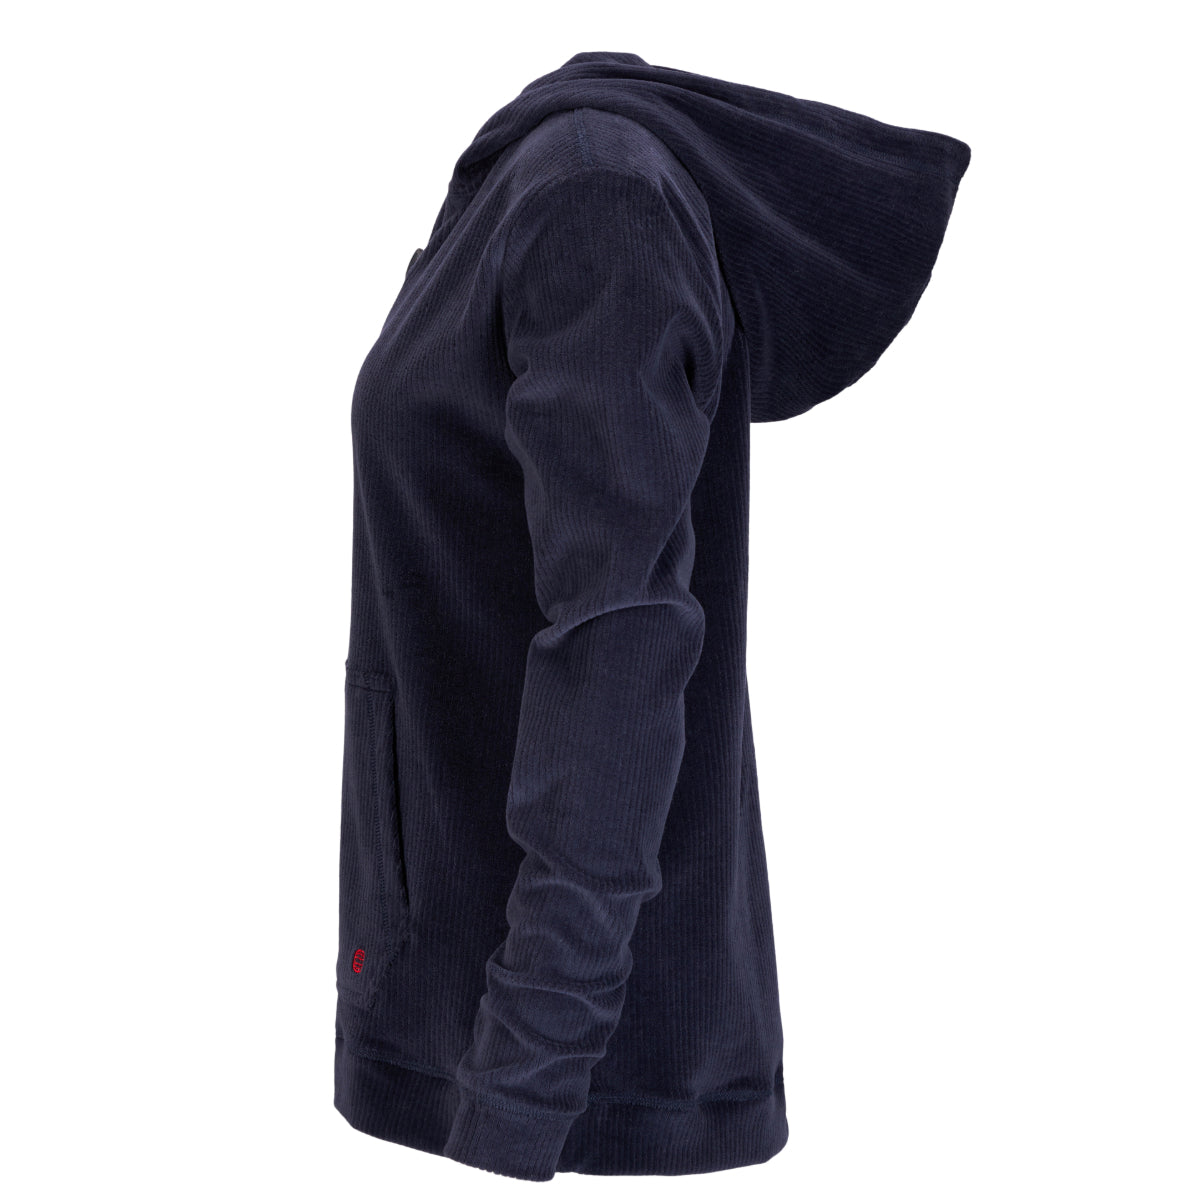 Amundsen Sports - Women's Comfy Cord Hood - Faded Navy